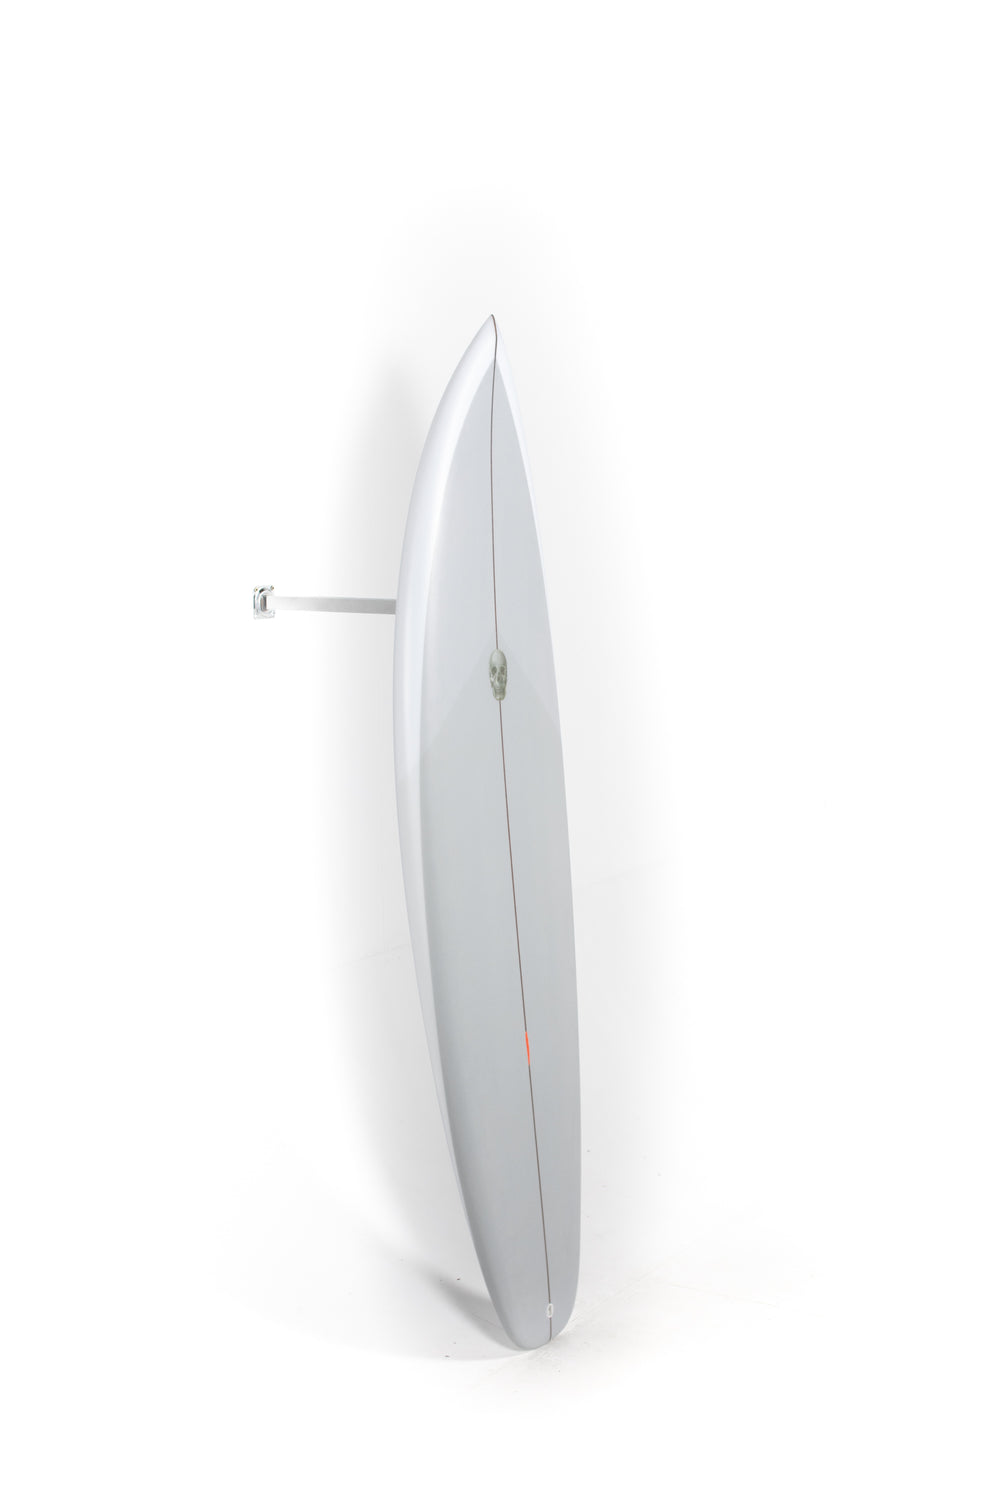 Christenson Surfboard - SURFER ROSA - 5'8” x 19 1/2 x 2 3/8 